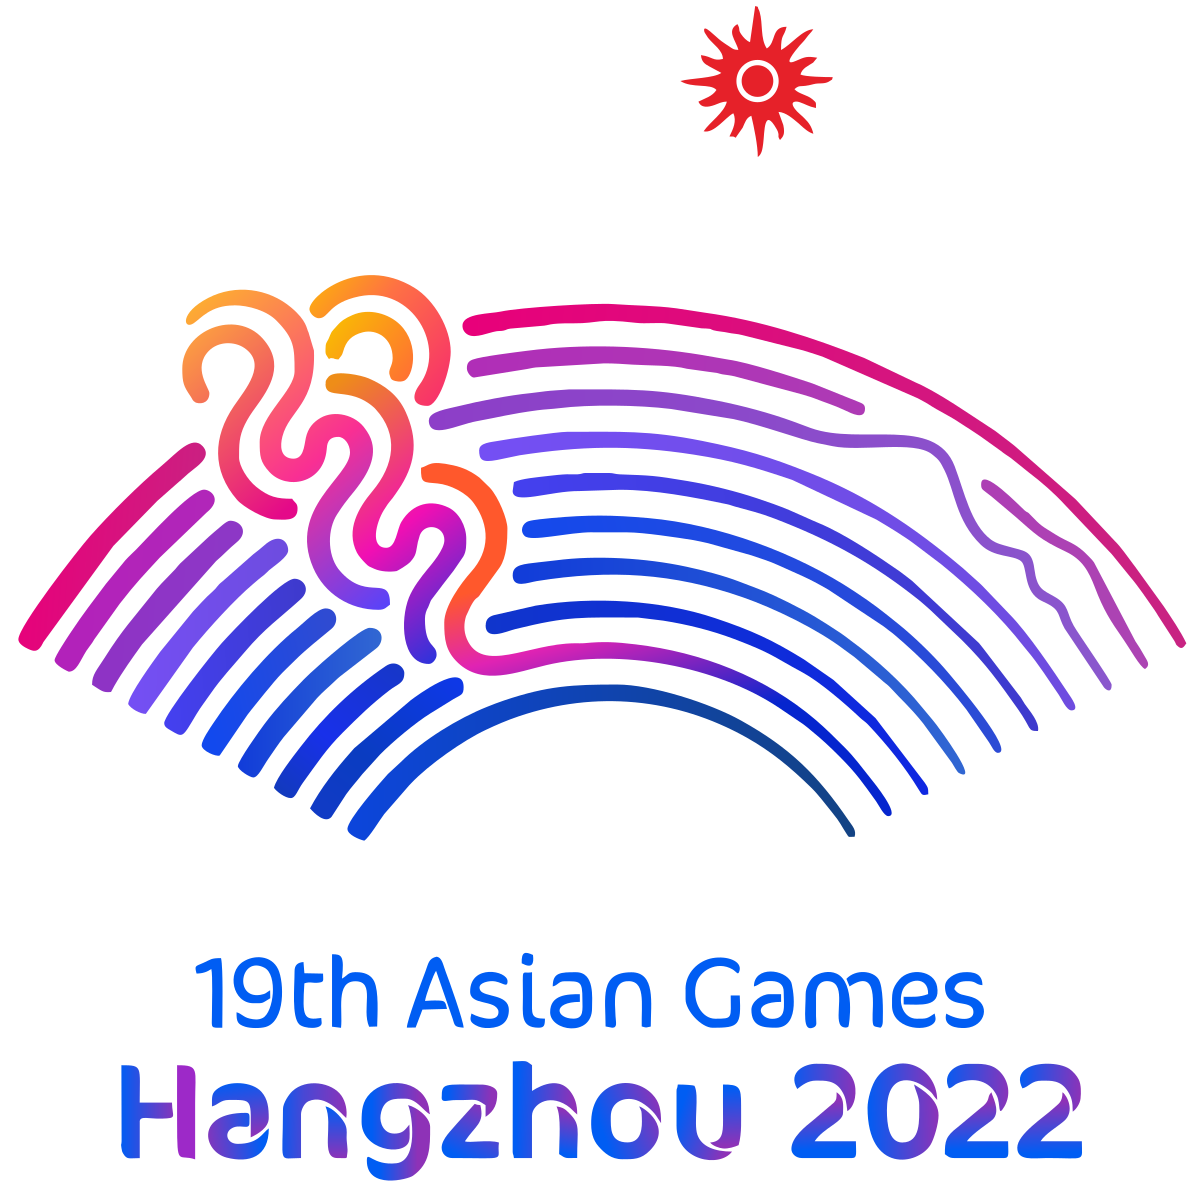 Hangzhou 2022 set campaigns to help volunteer recruitment